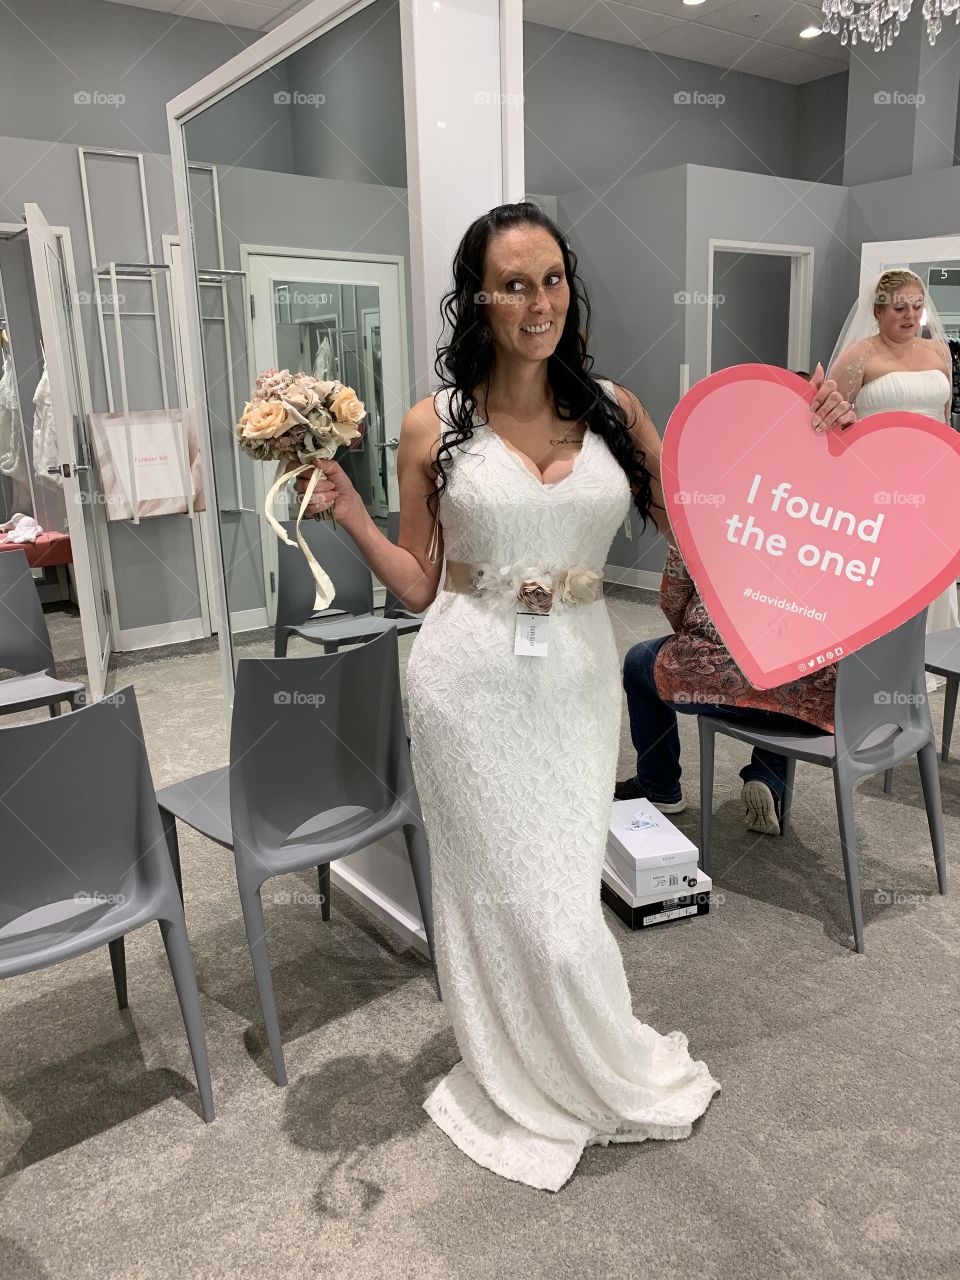 Bride finds beautiful wedding dress